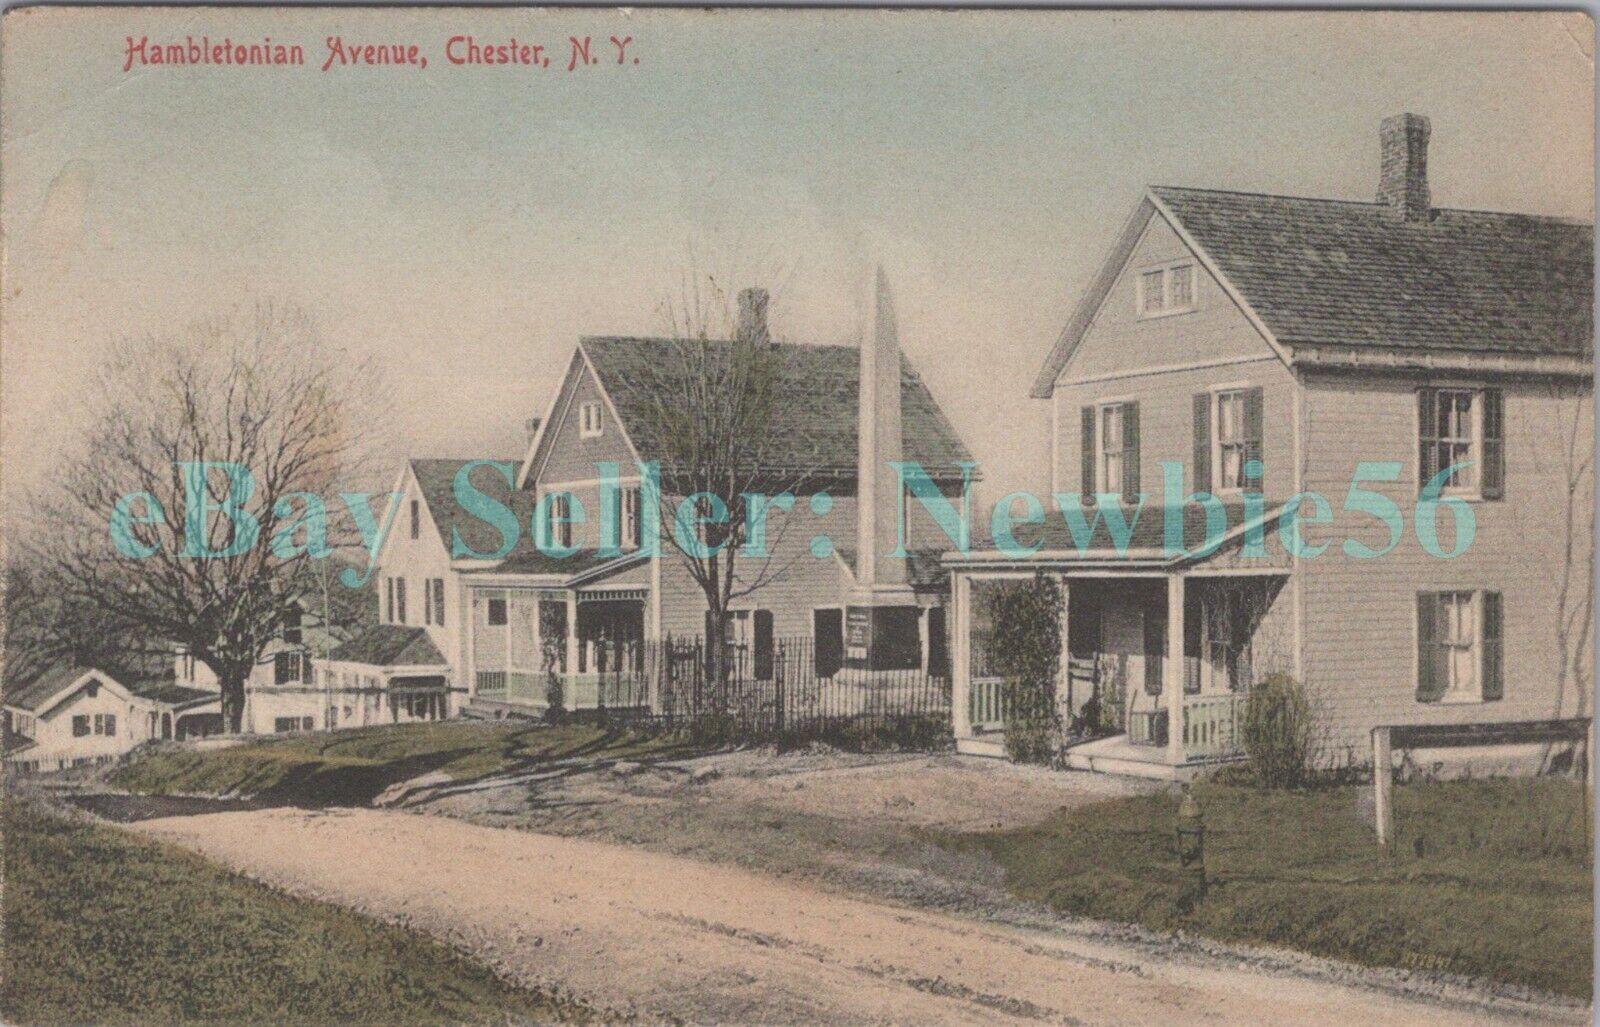 Chester NY - HOUSES ON HAMBLETONIAN AVENUE - Postcard Orange County